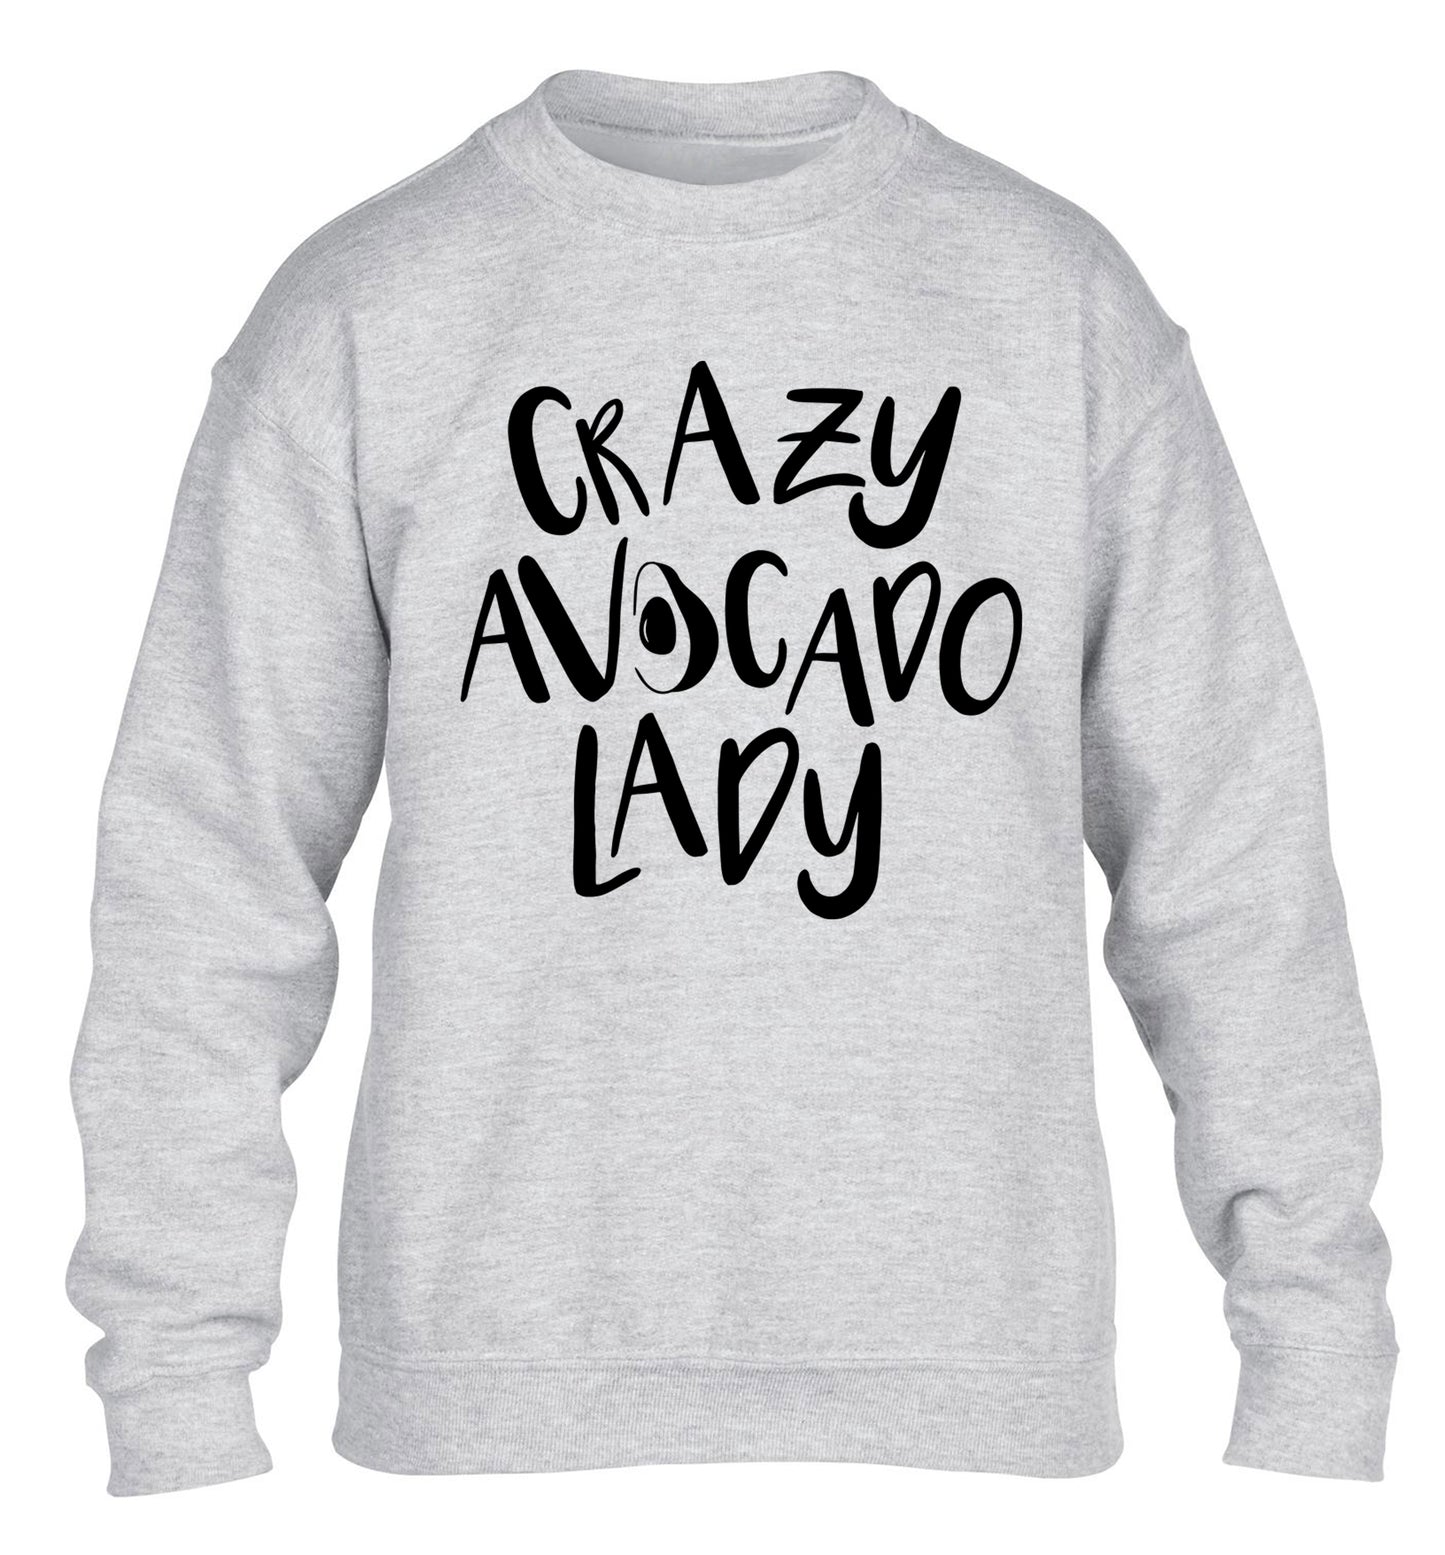 Crazy avocado lady children's grey sweater 12-14 Years